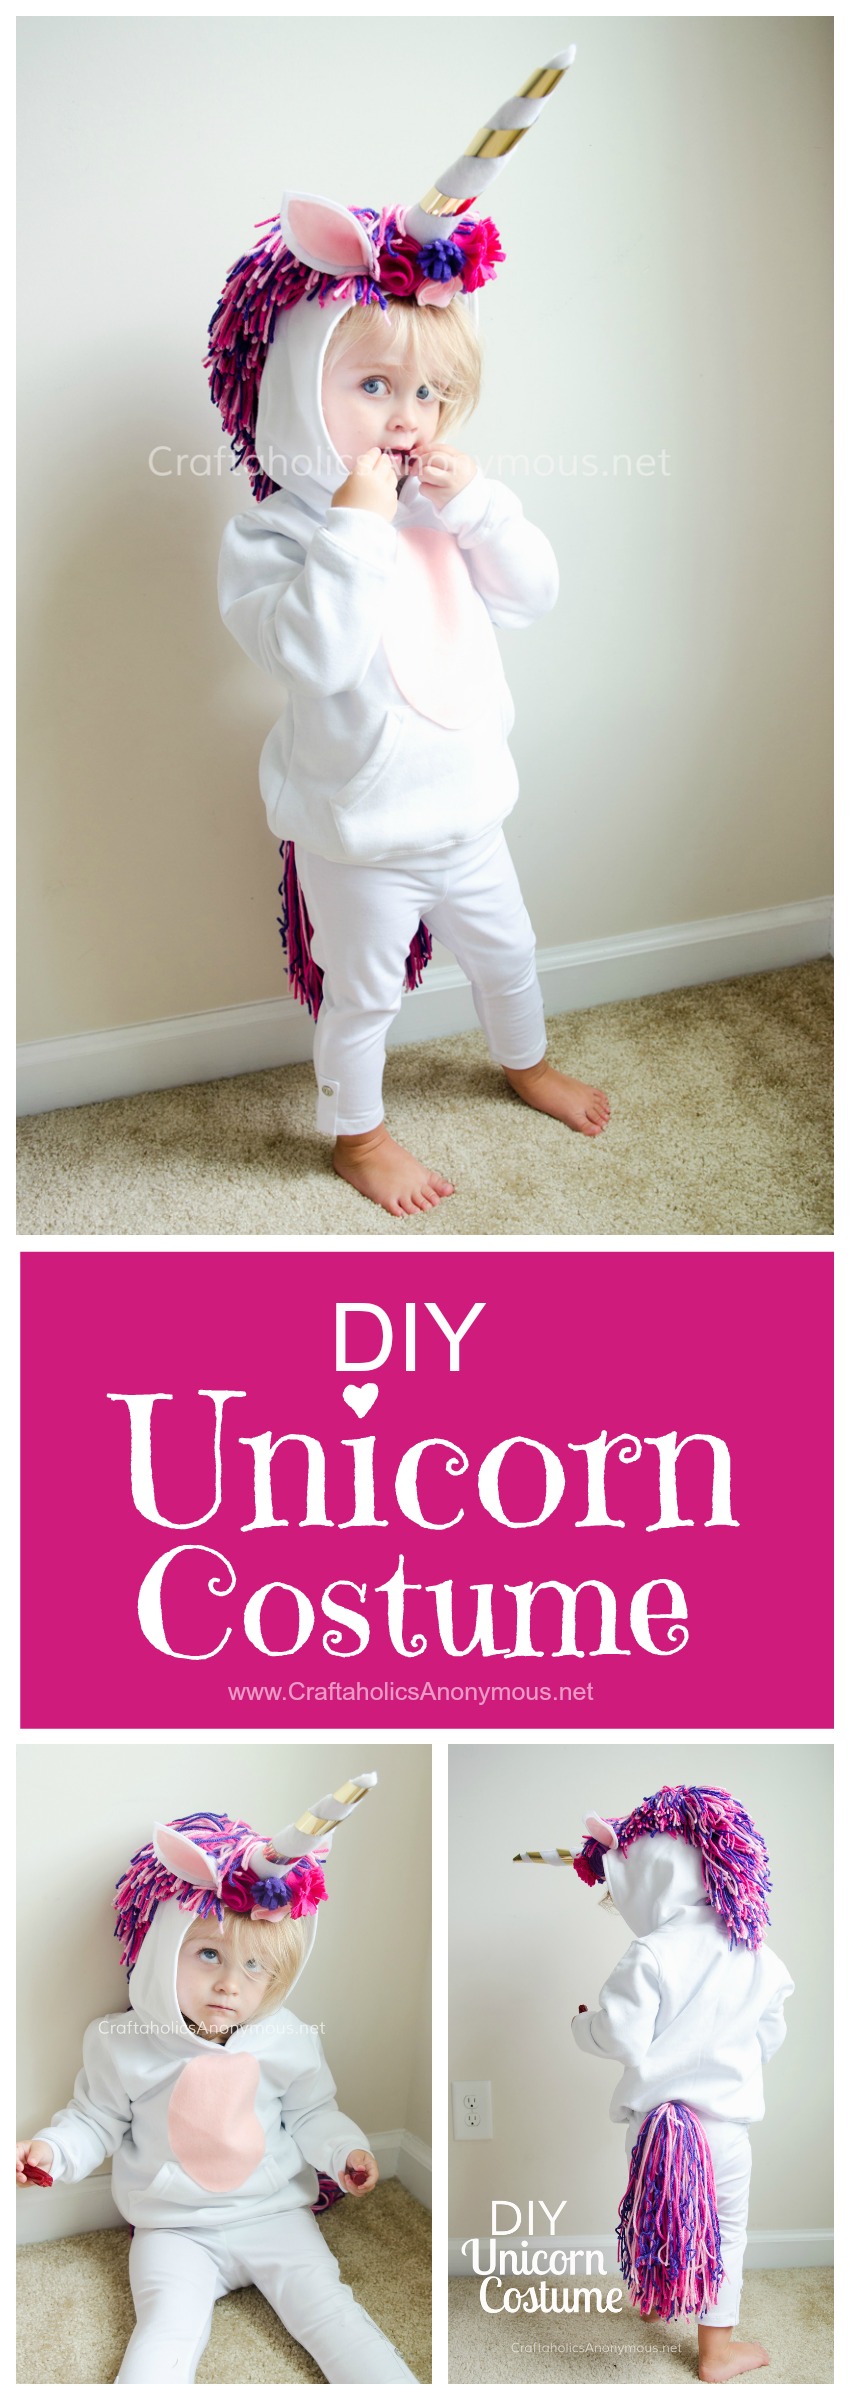 Unicorn-Costume-DIY-collage